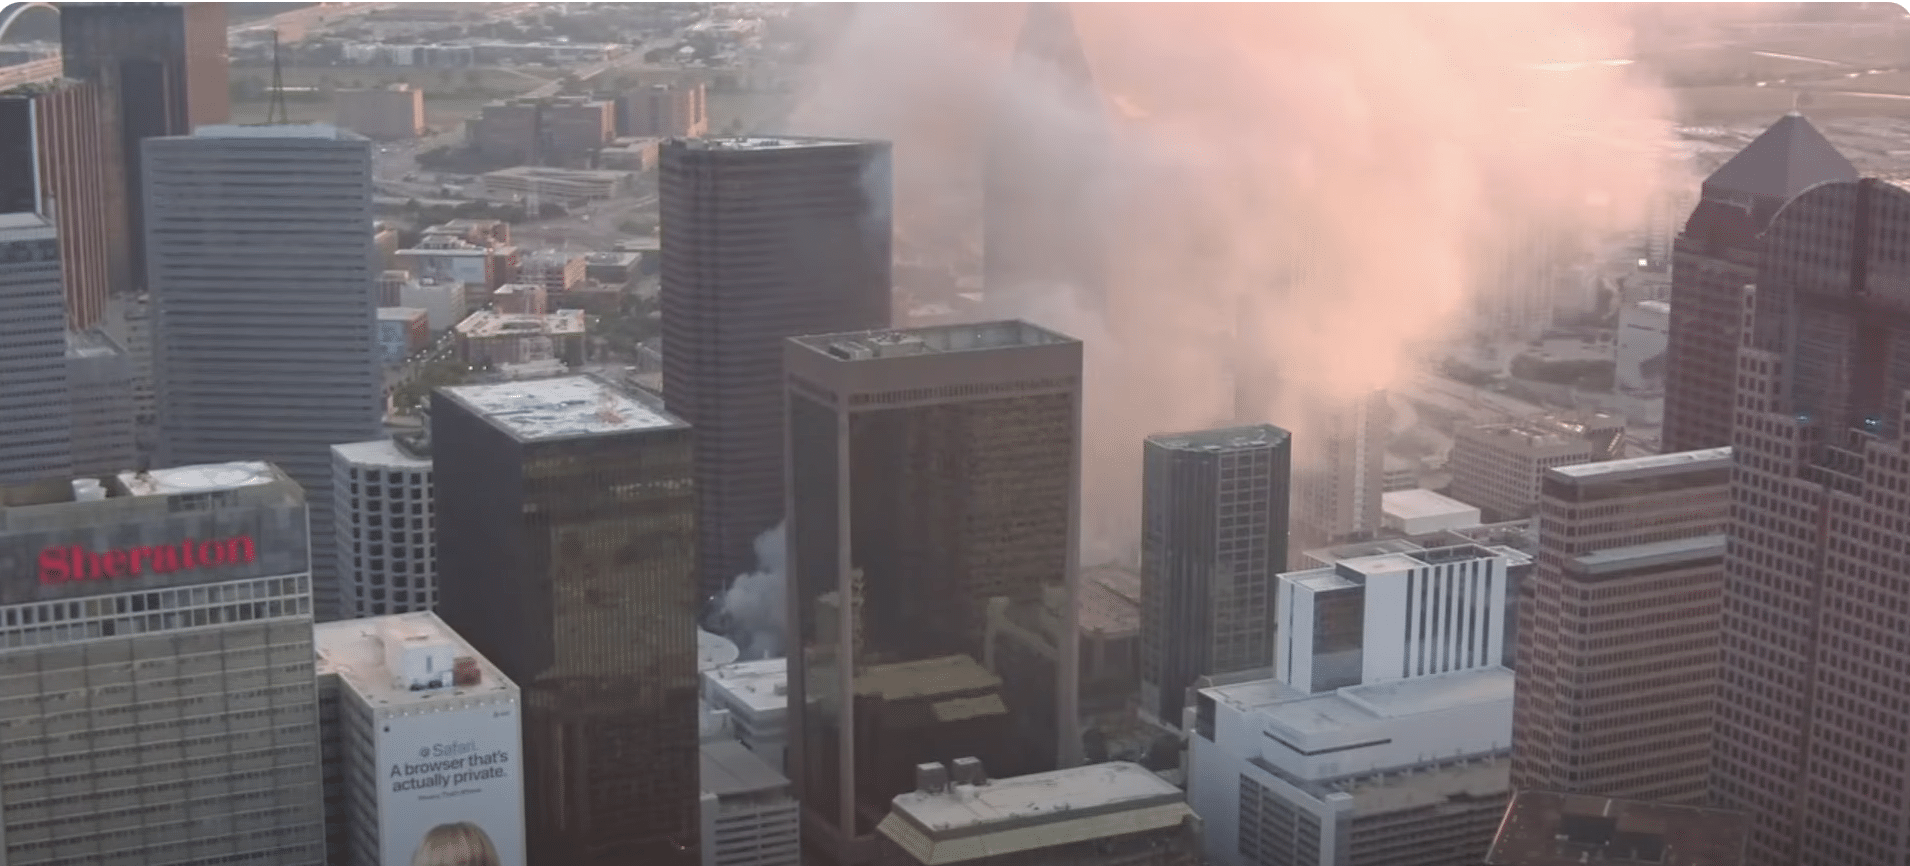 DEVELOPING: Robert Jeffress’ Dallas Megachurch in flames, Witness heard loud explosion before fire began